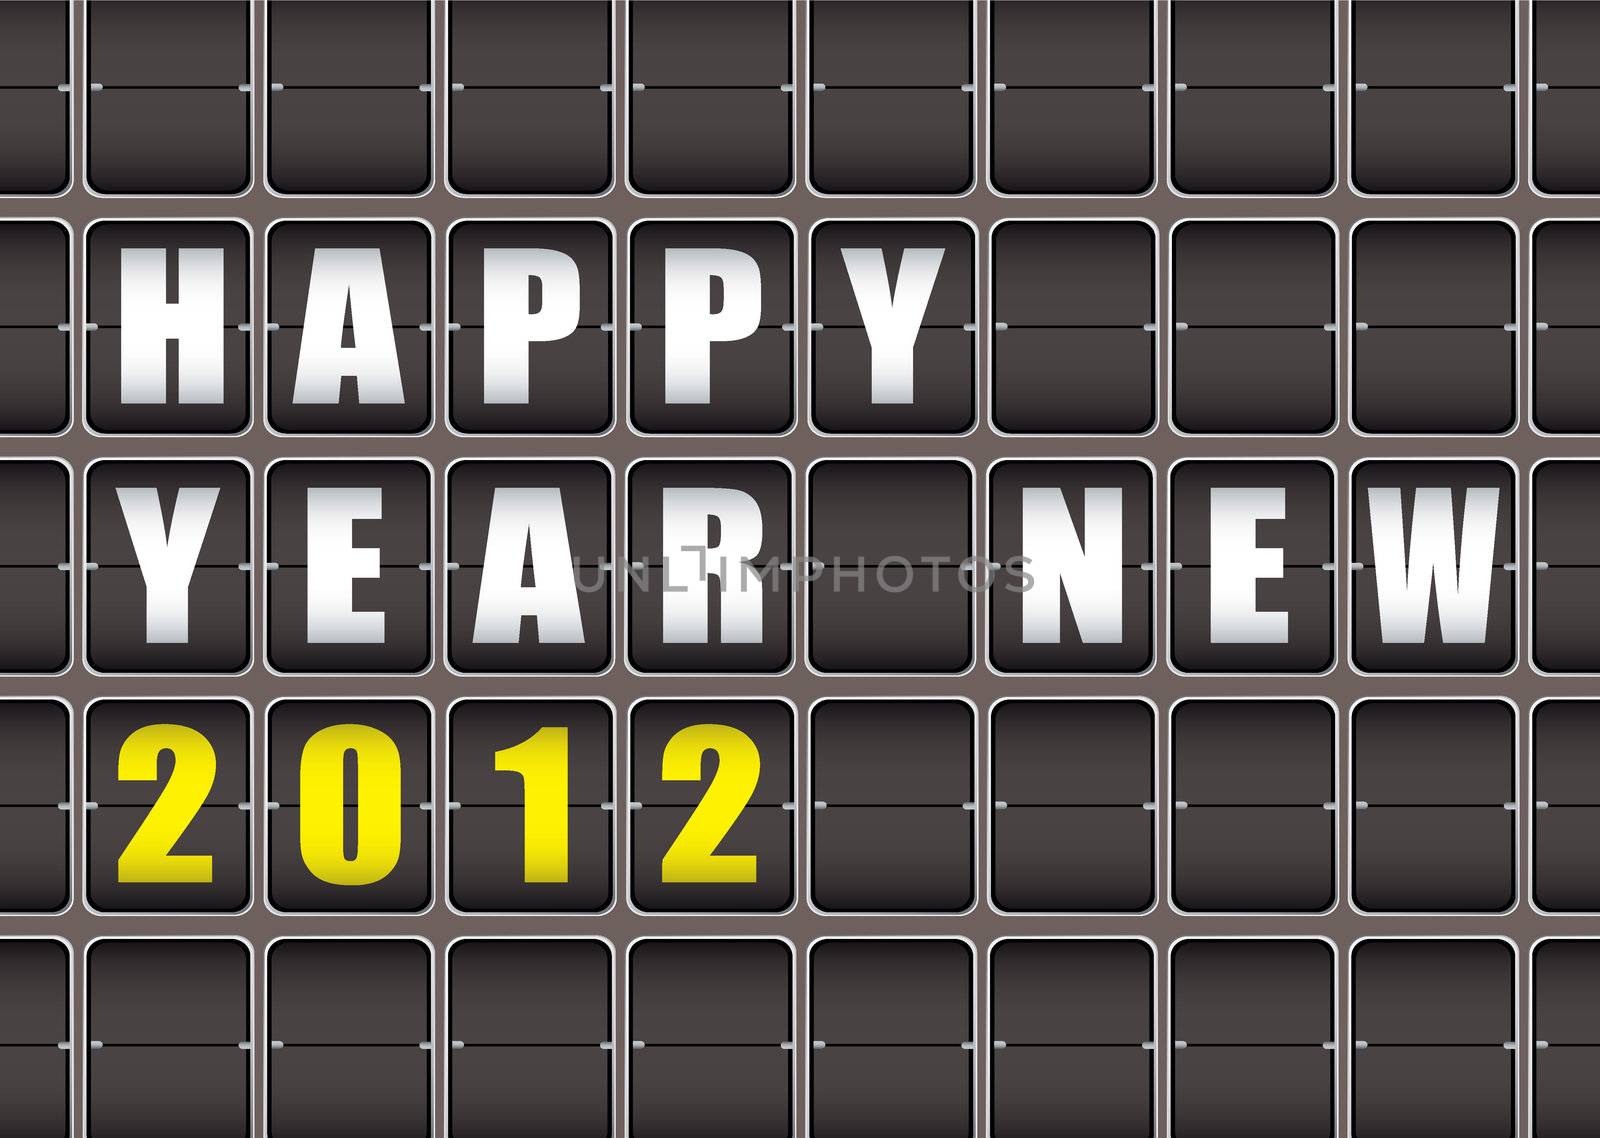 Happy New Year railway ticker board